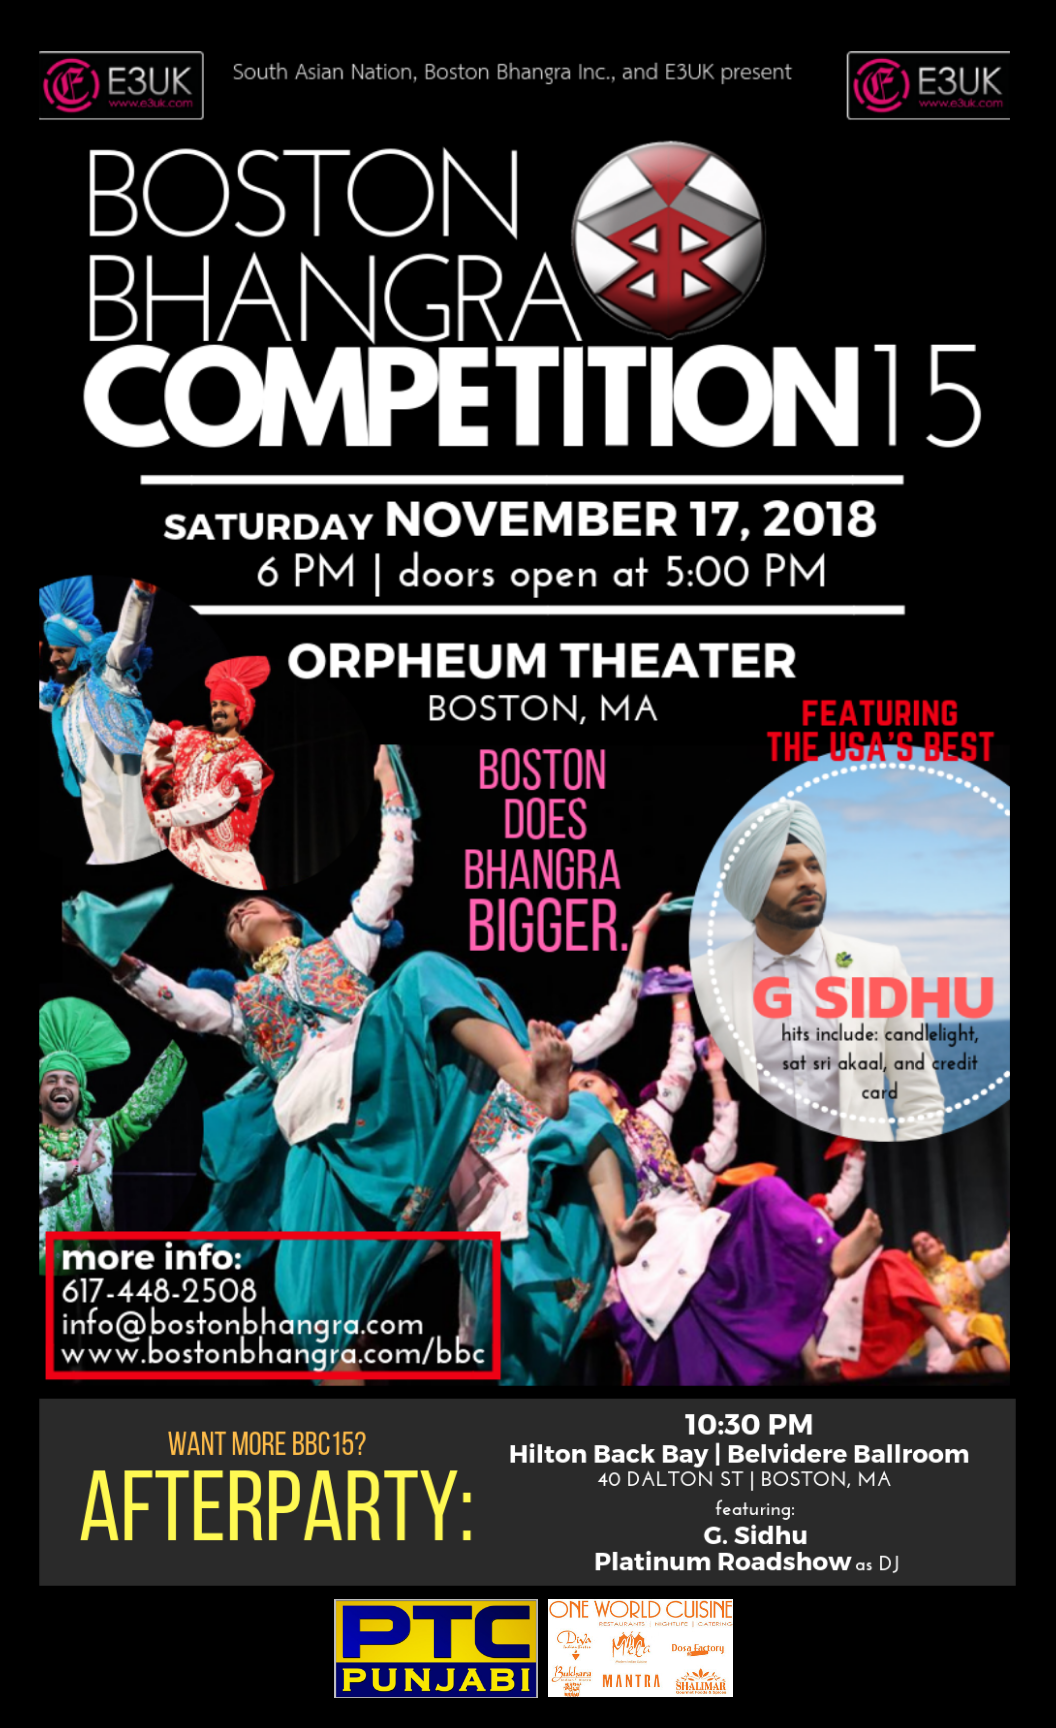 Boston Bhangra Competition 15